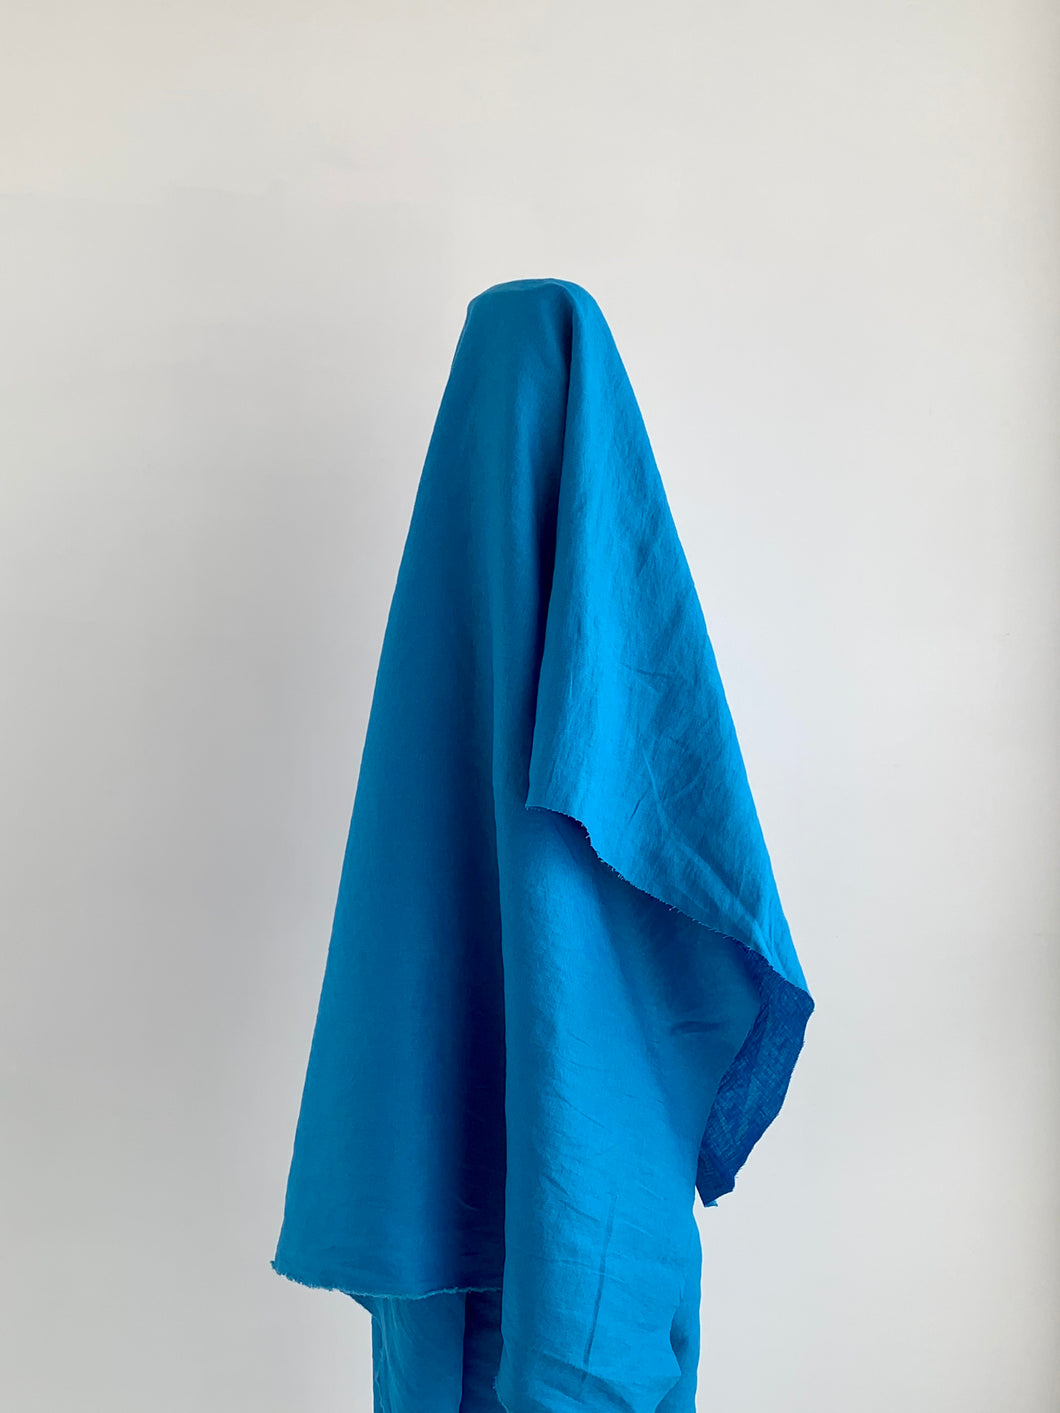 Electric Blue Prewashed 100% Linen fabric